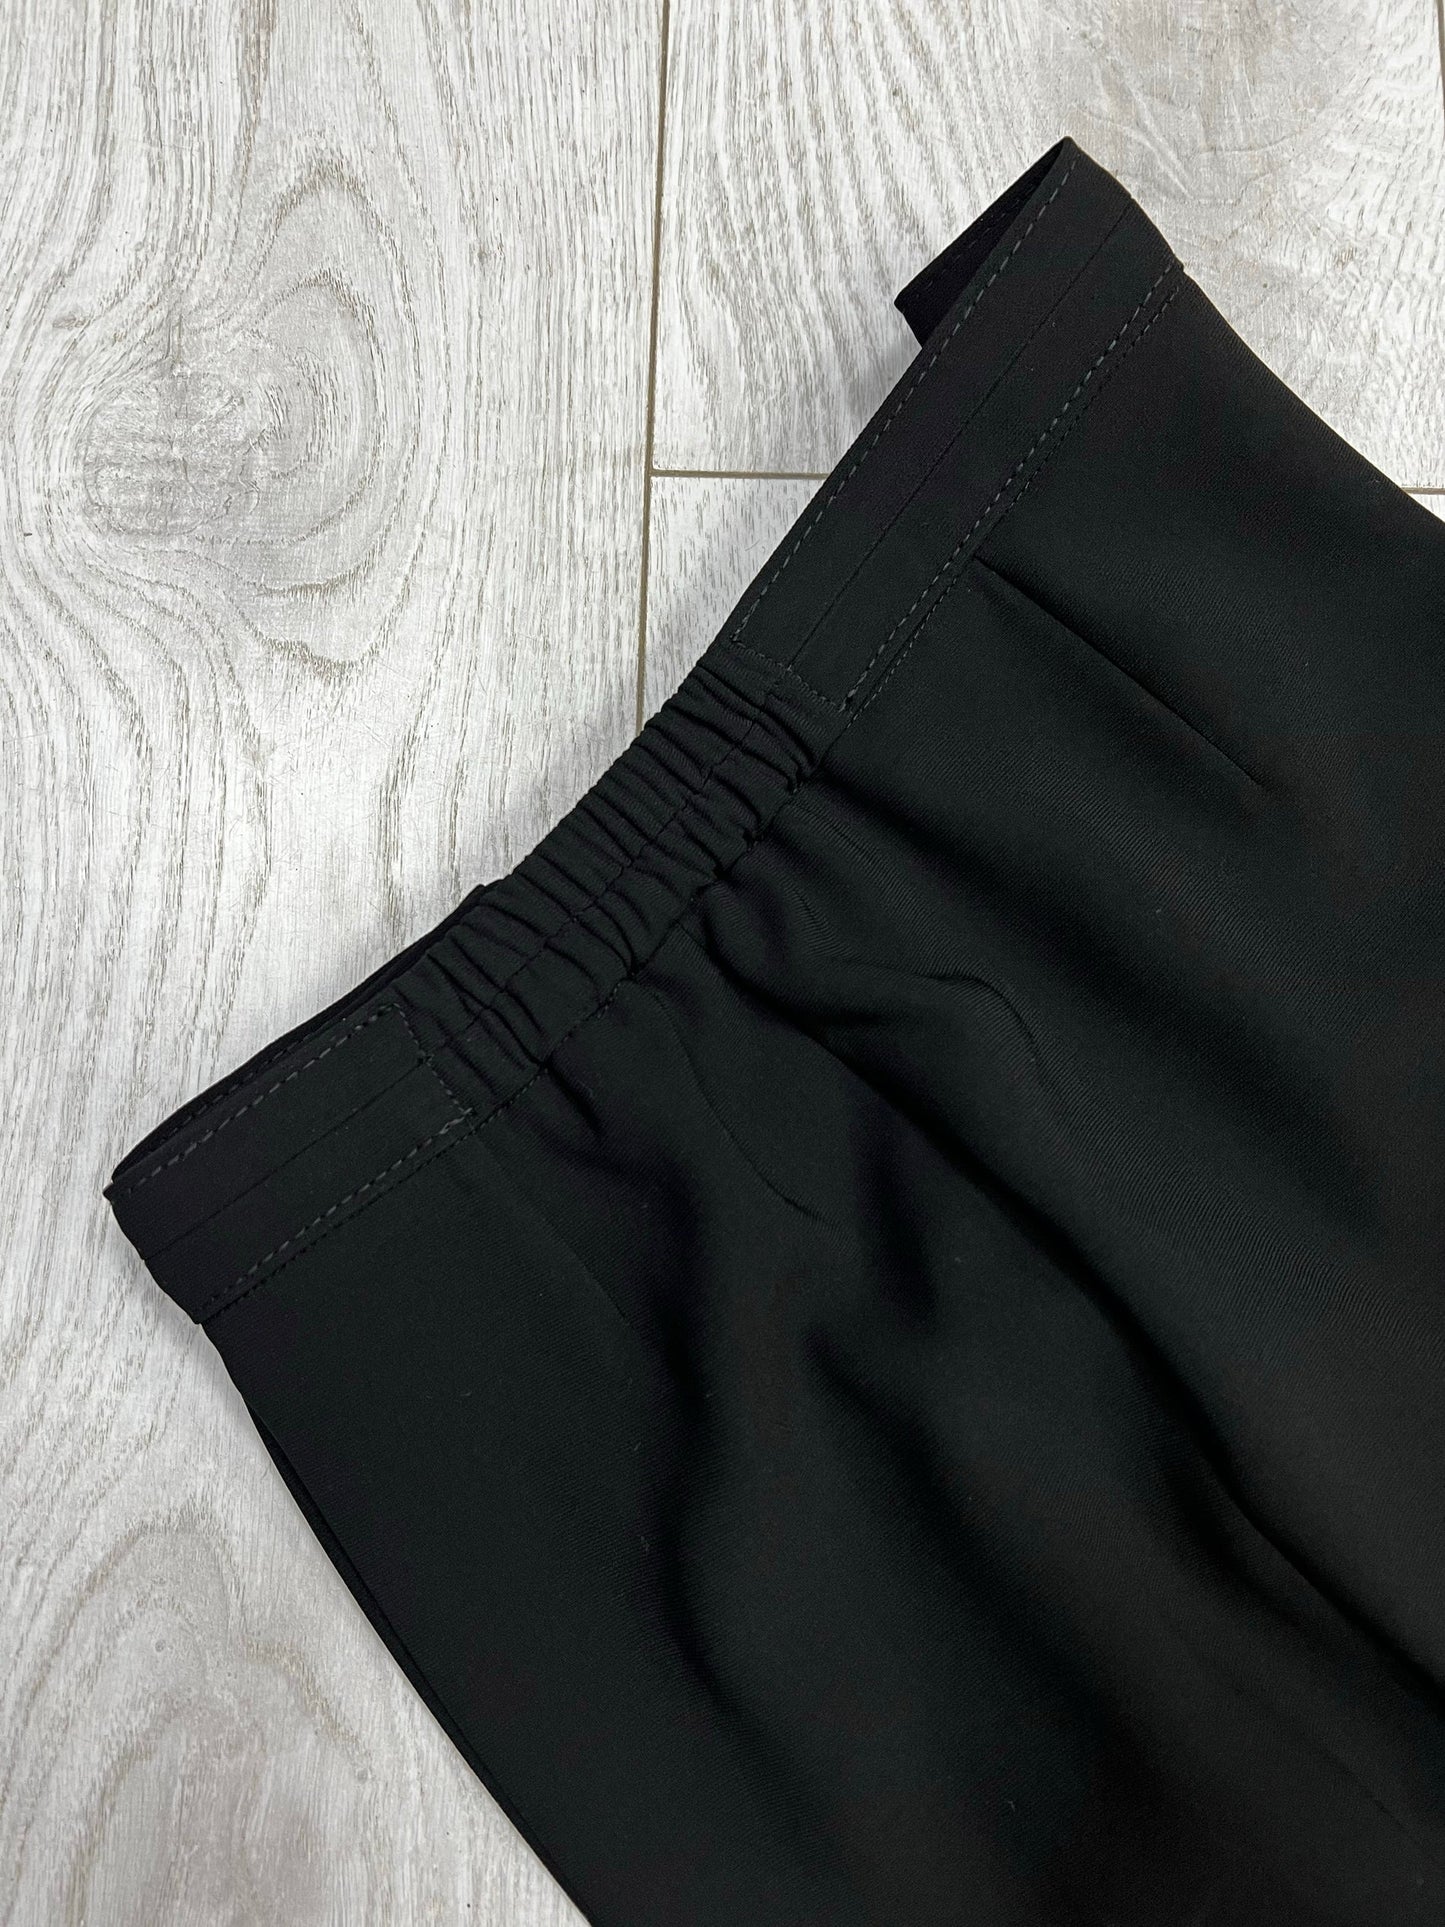 Black tailored trousers 33 inch inside leg